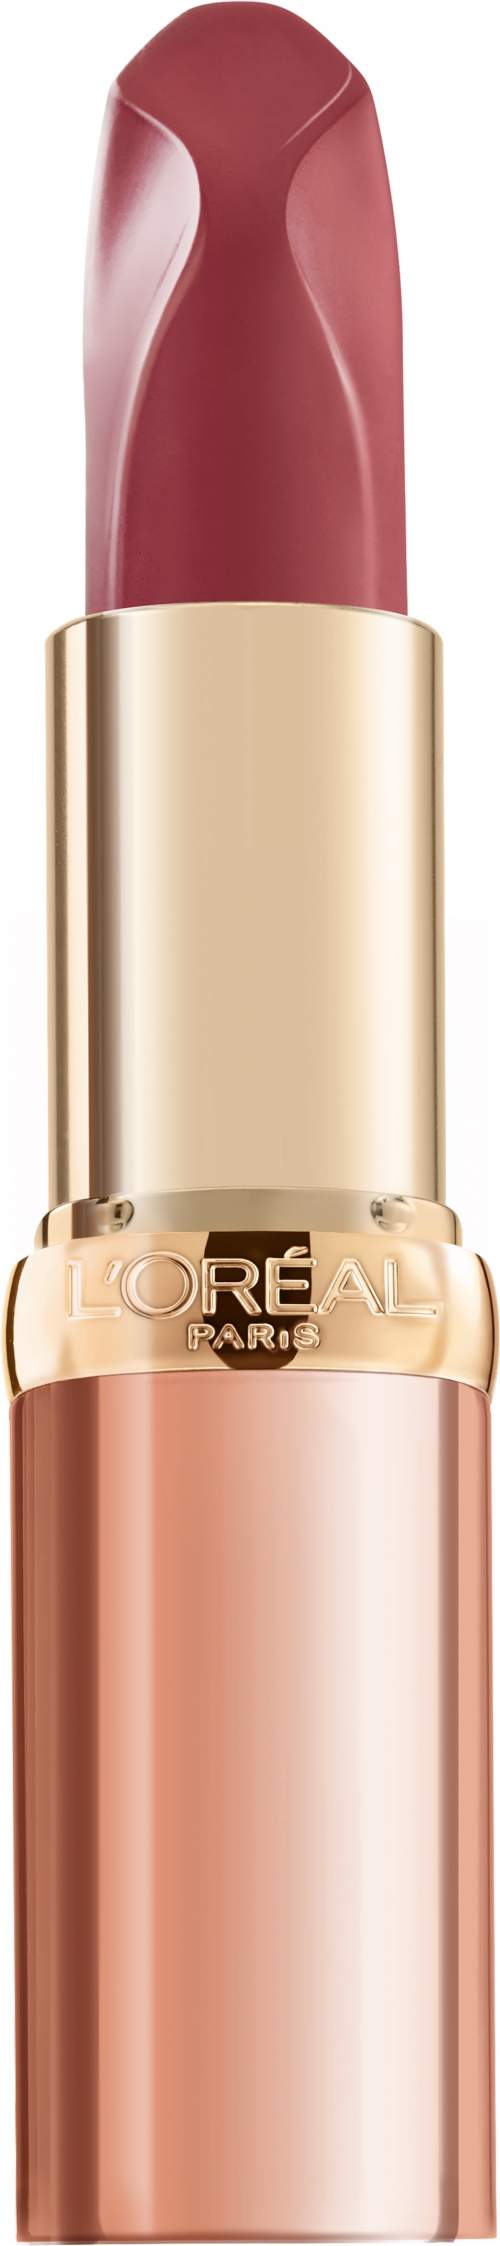 L'Oréal Paris Color Riche Nude Intense hydratační rtěnka 3,6 g odstín 177 Nu Authentique